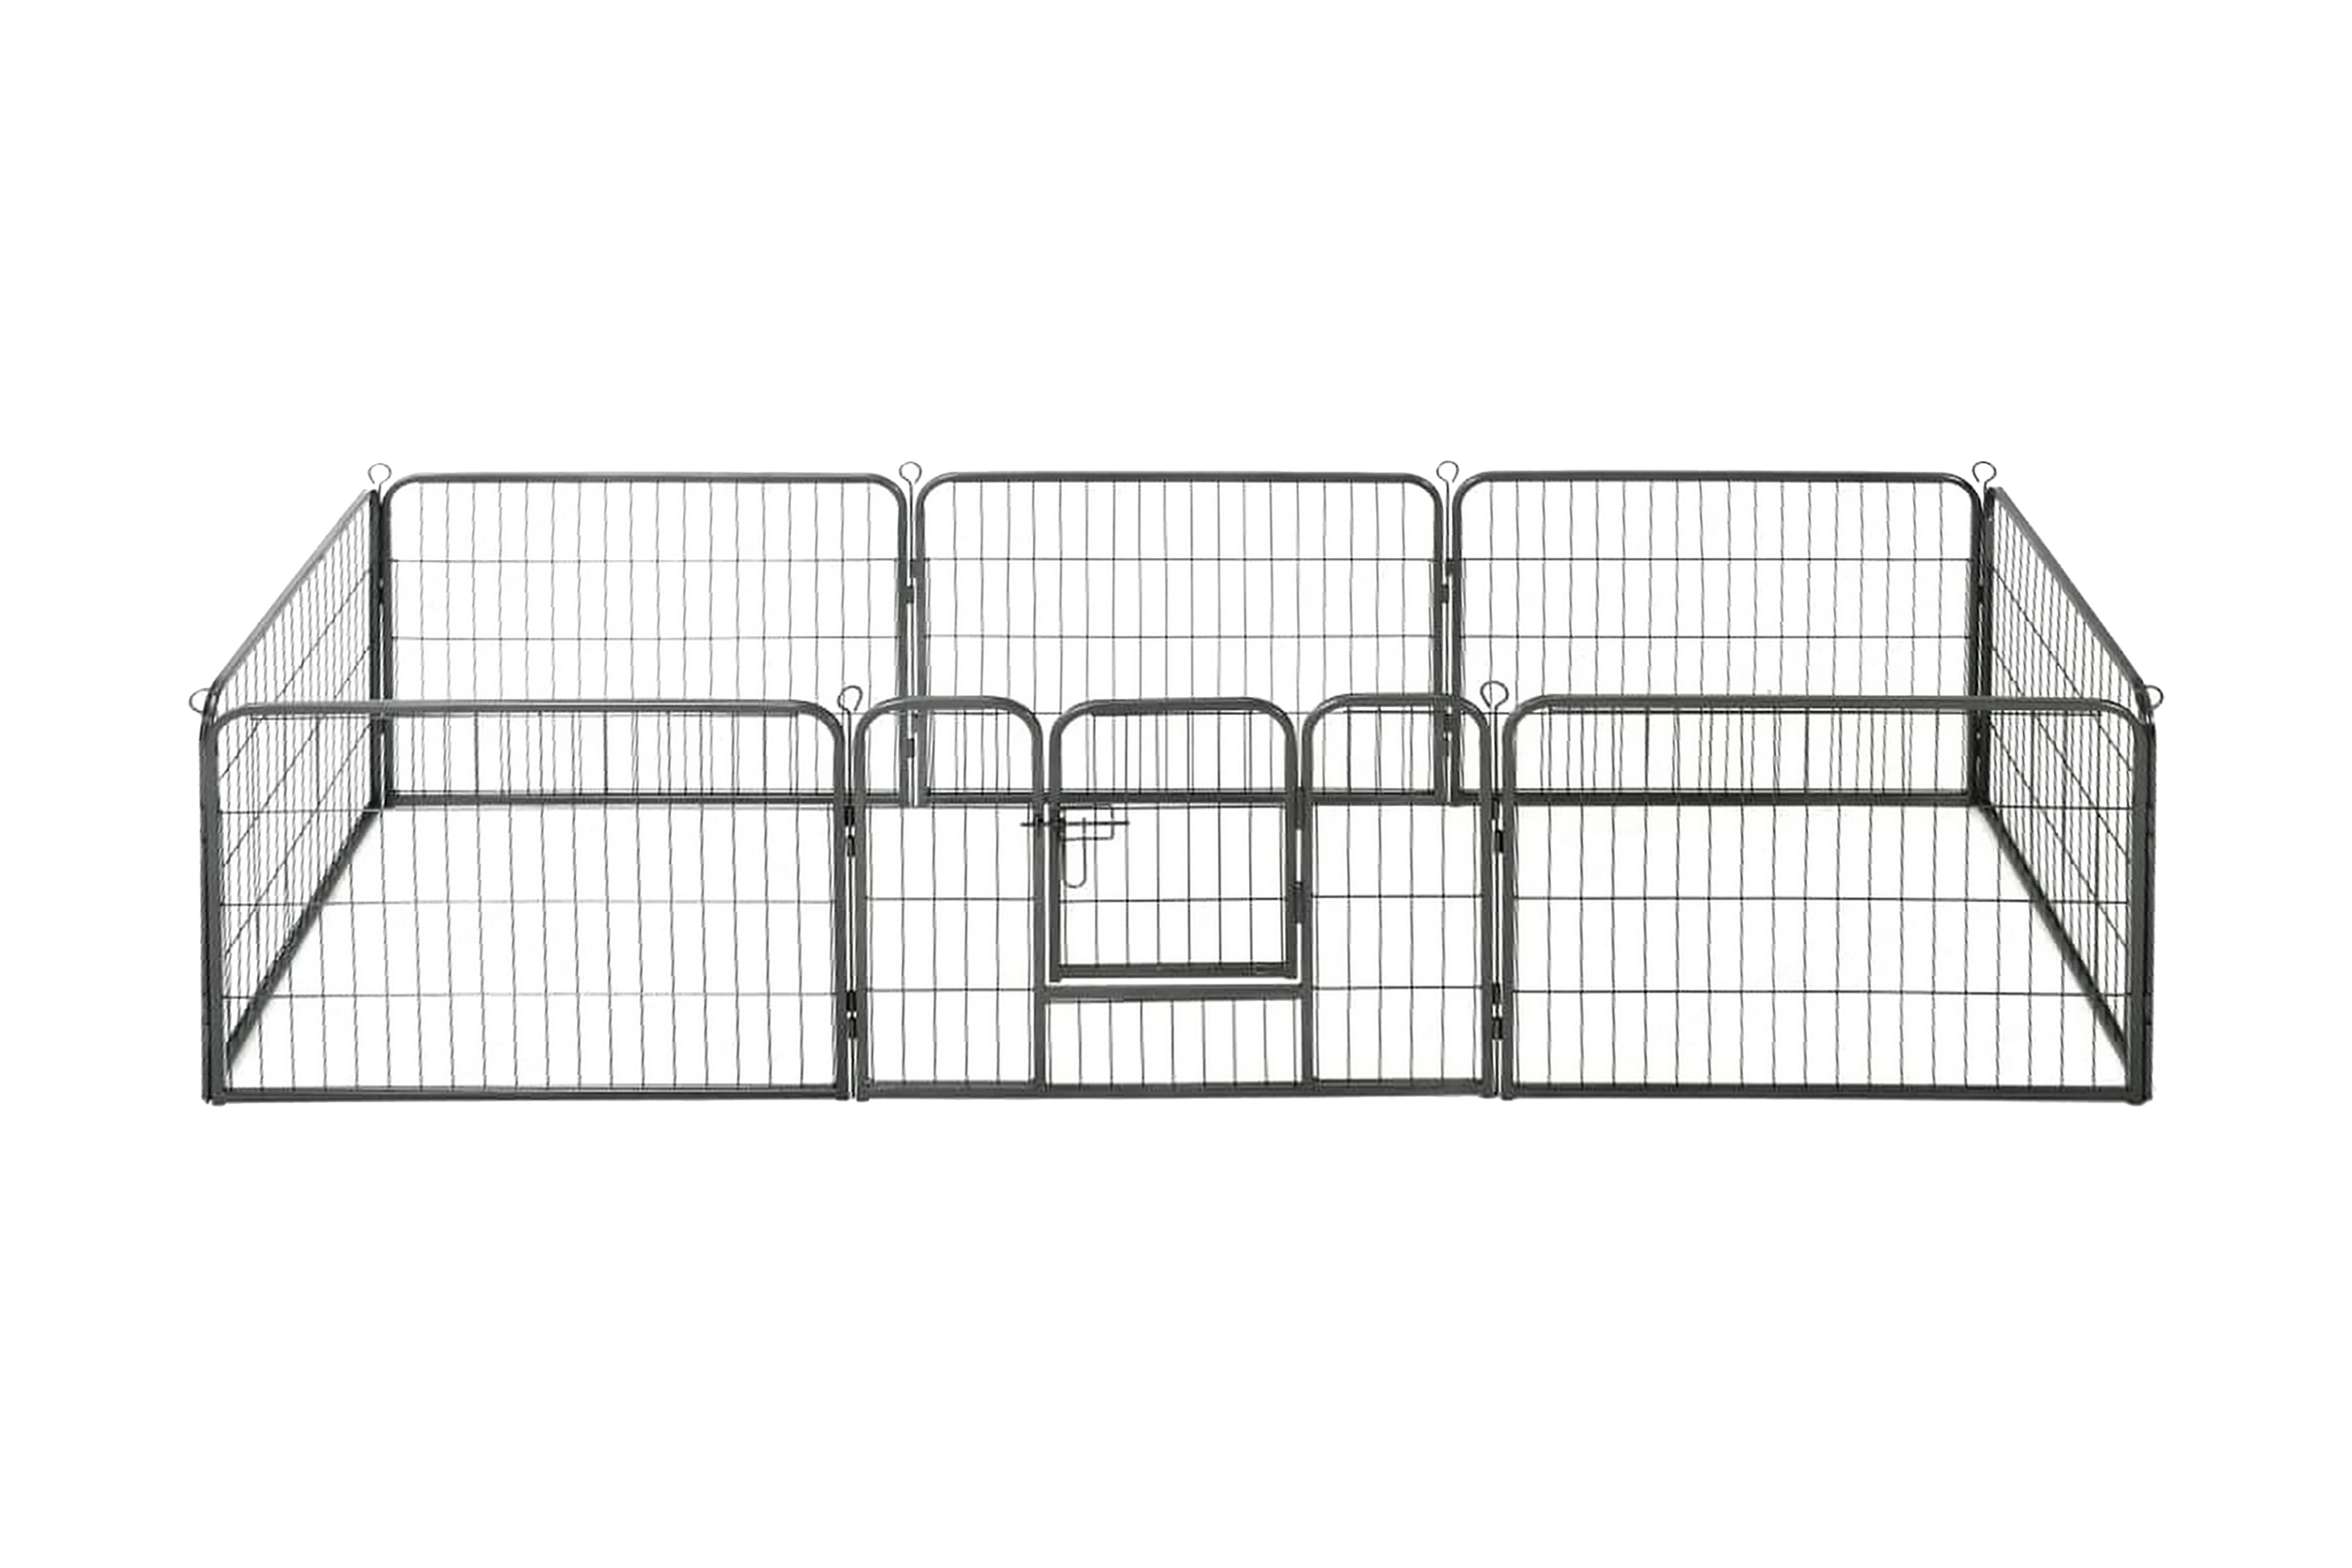 Hundhage 8 paneler stål 60x80 cm svart - Svart 170572